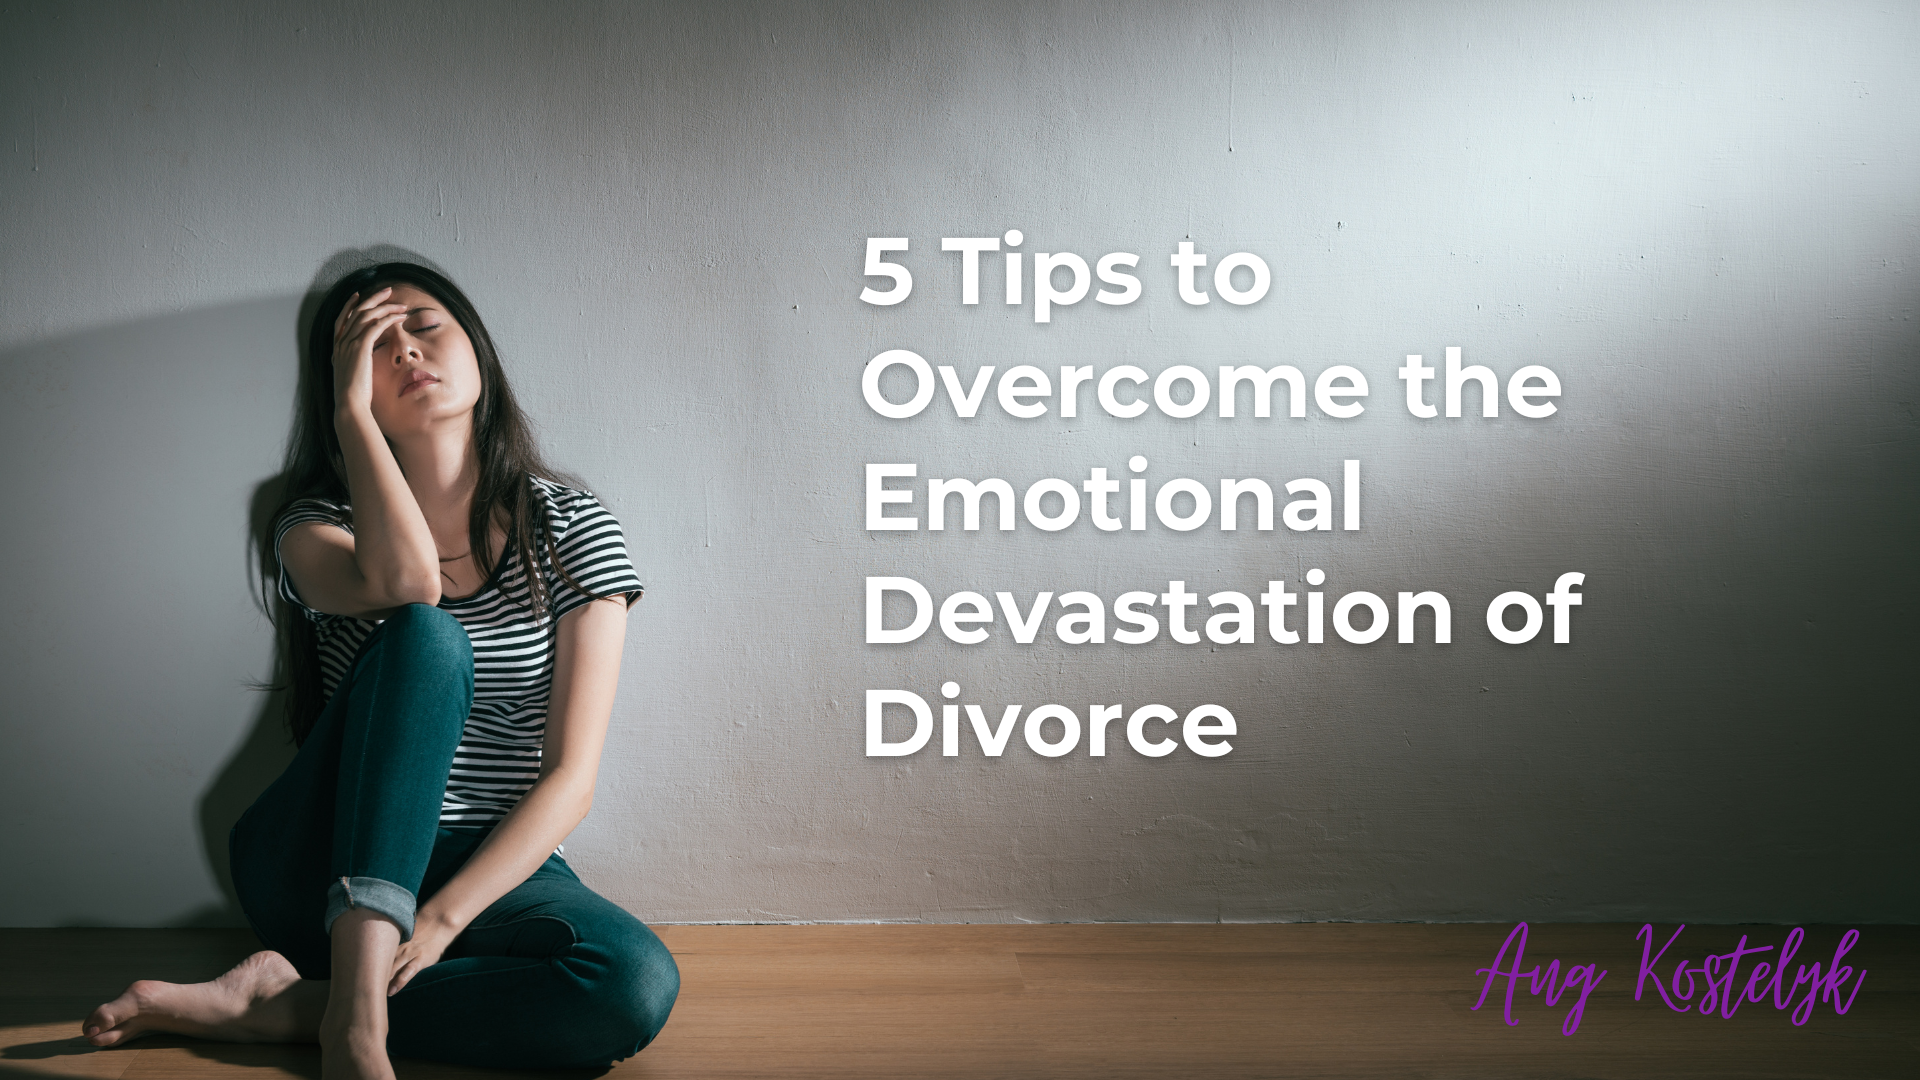 5 Tips to Overcome the Emotional Devastation of Divorce